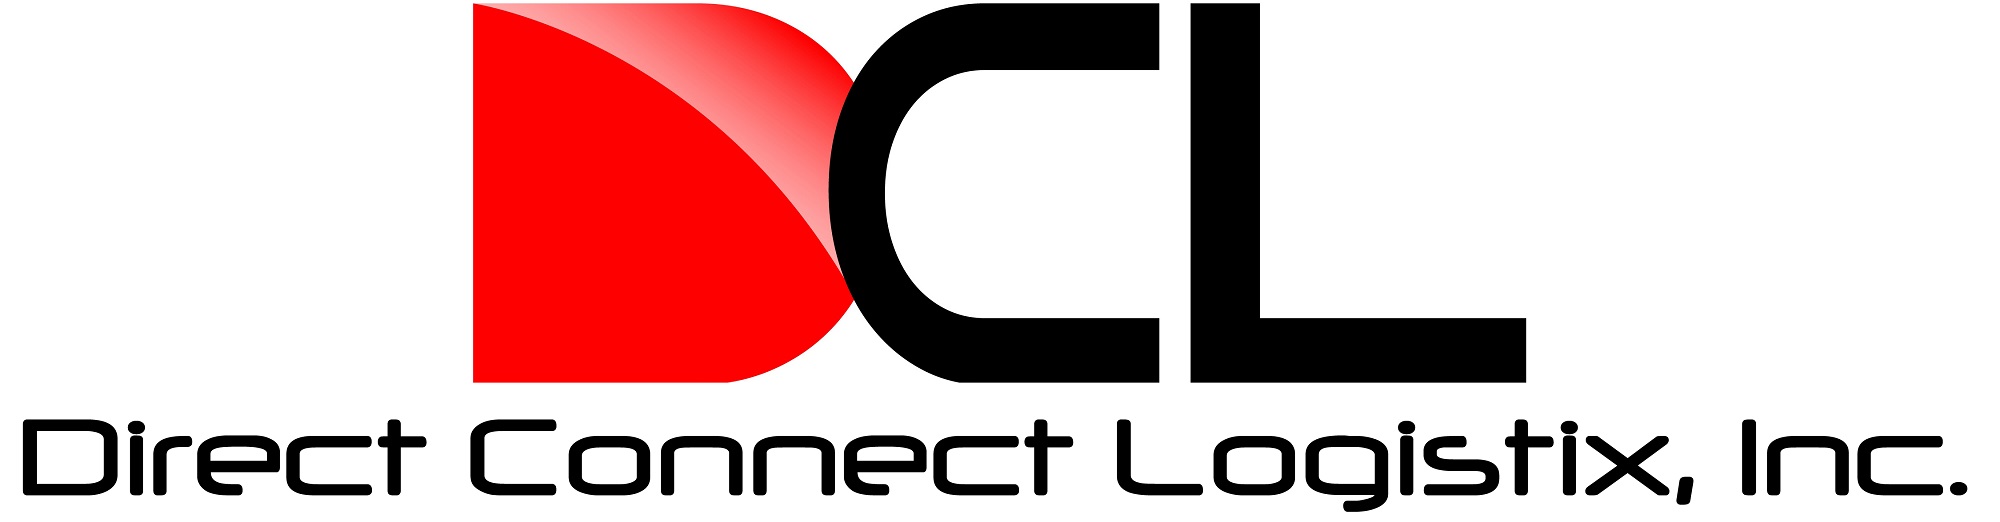 Direct Connect Logistix, Inc. Logo